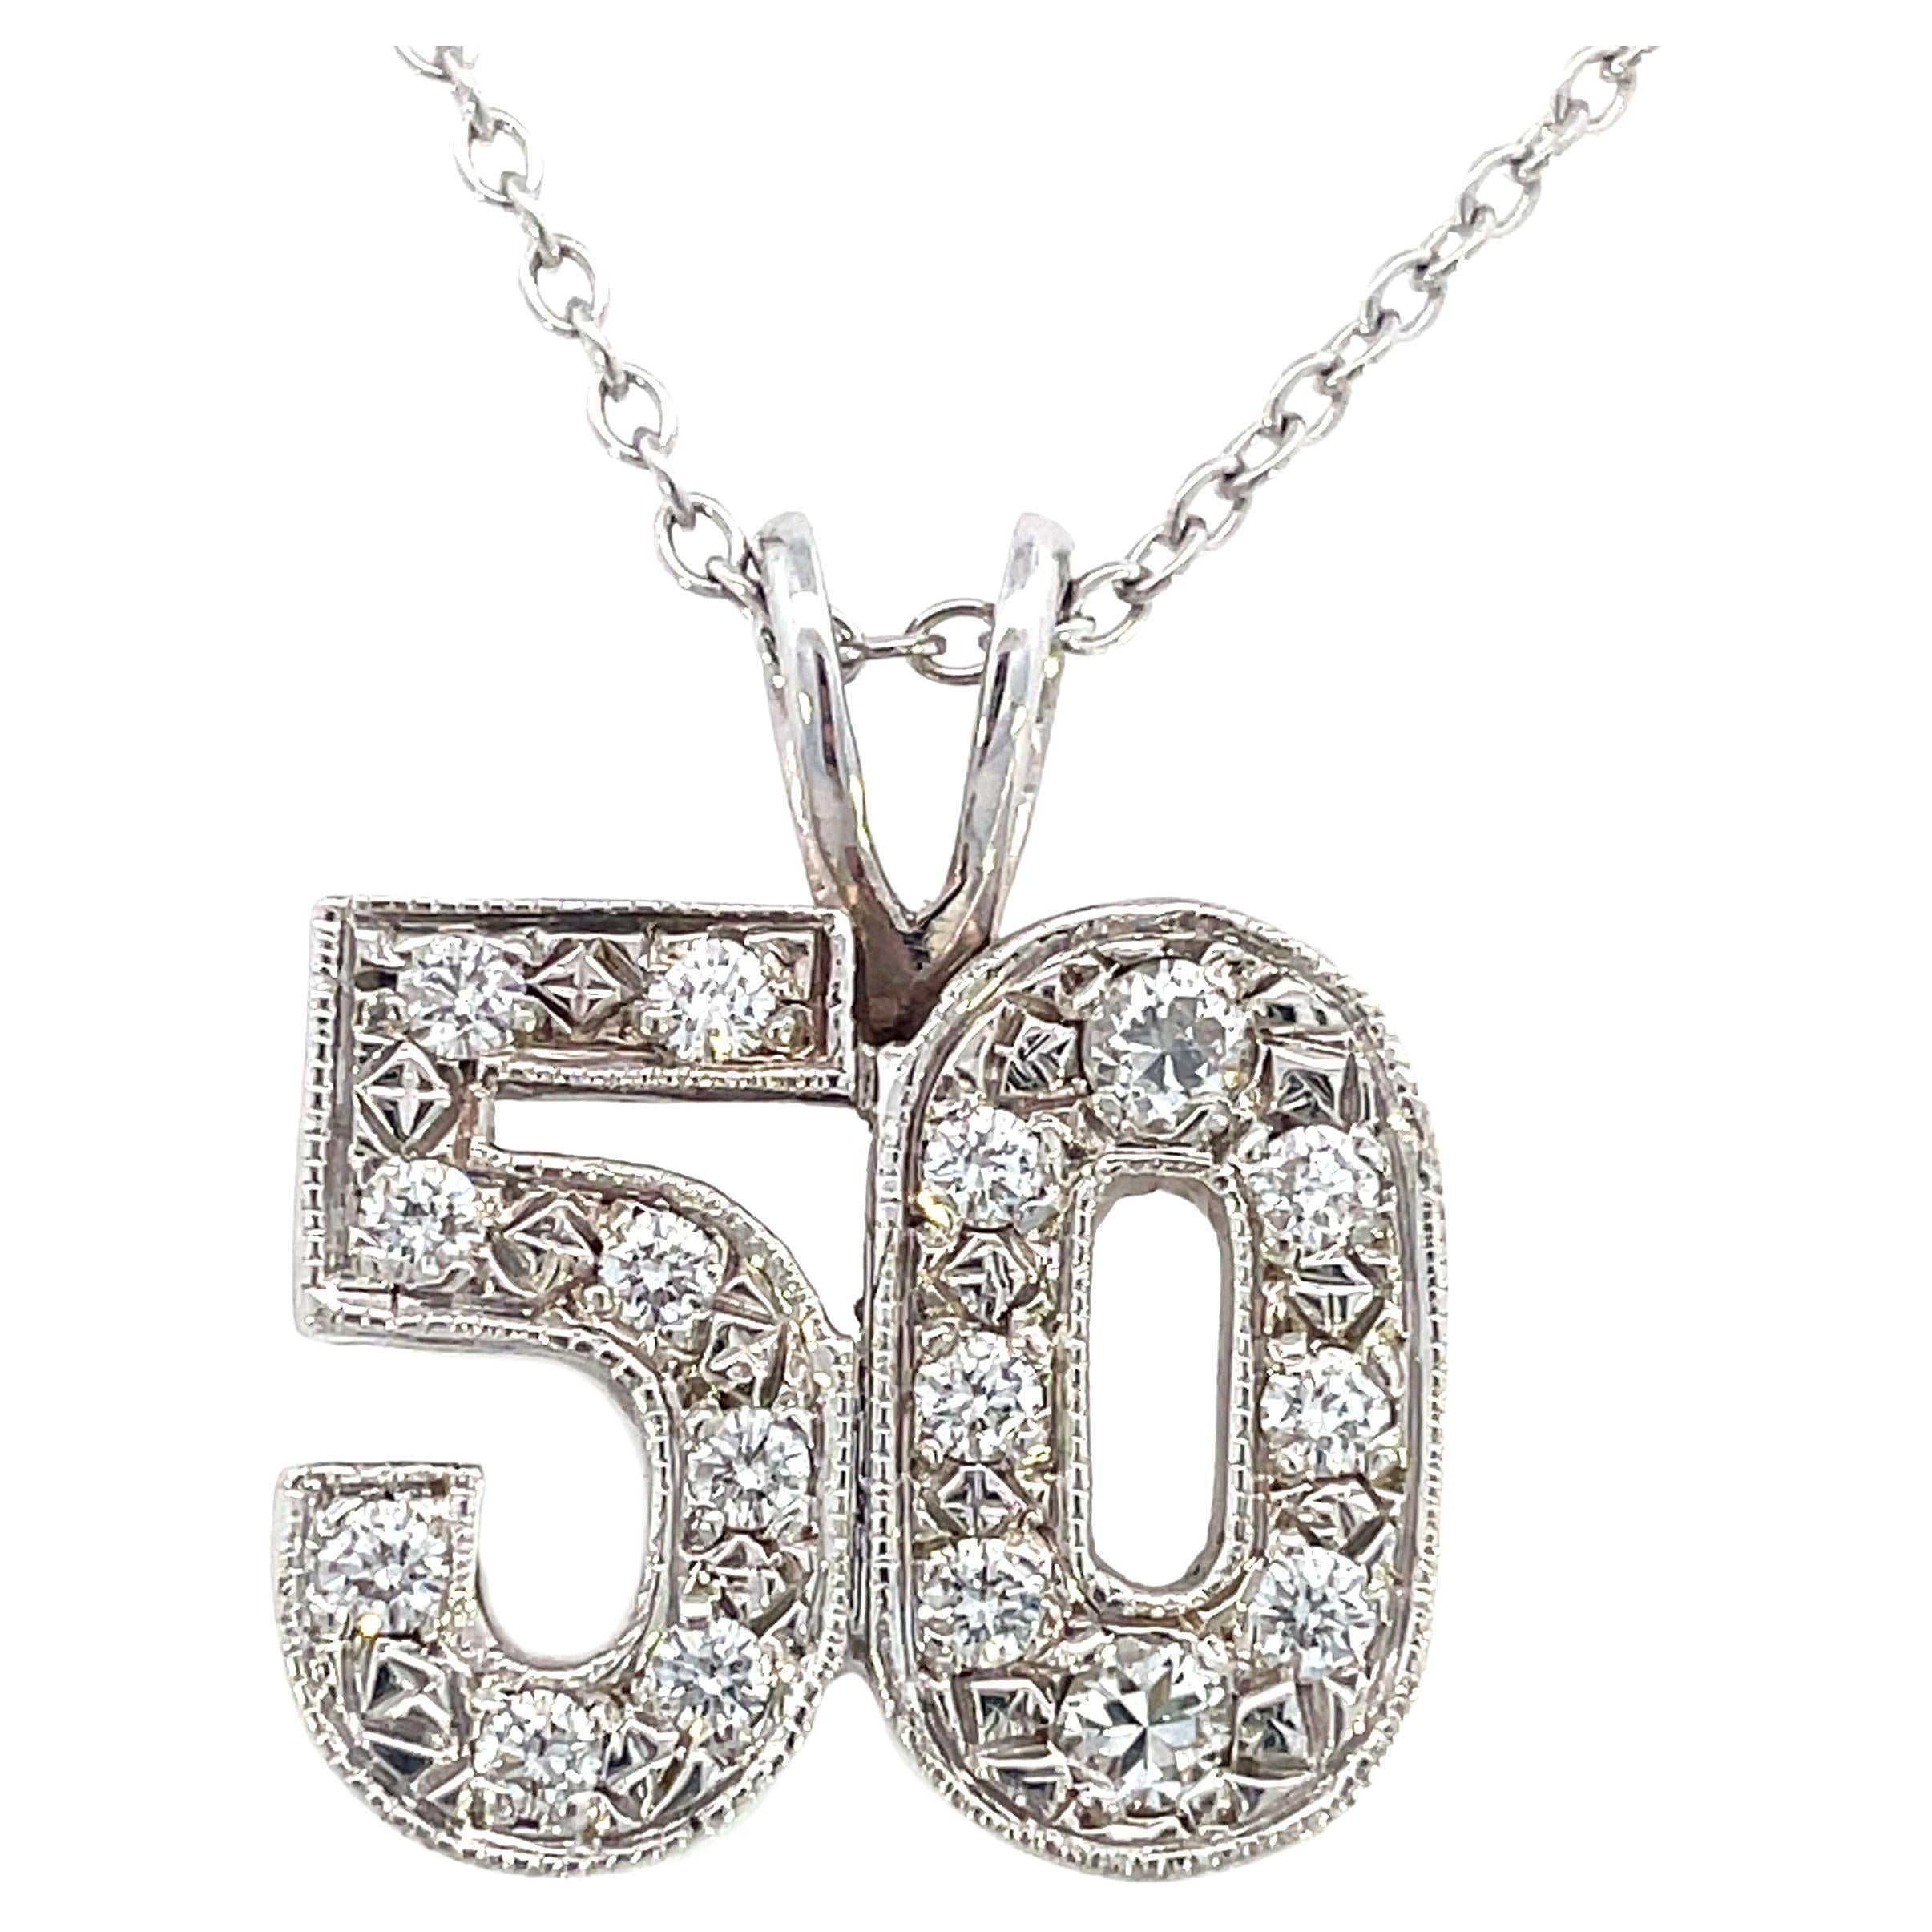 Contemporary 14K White Gold Diamond "50" Pendant For Sale